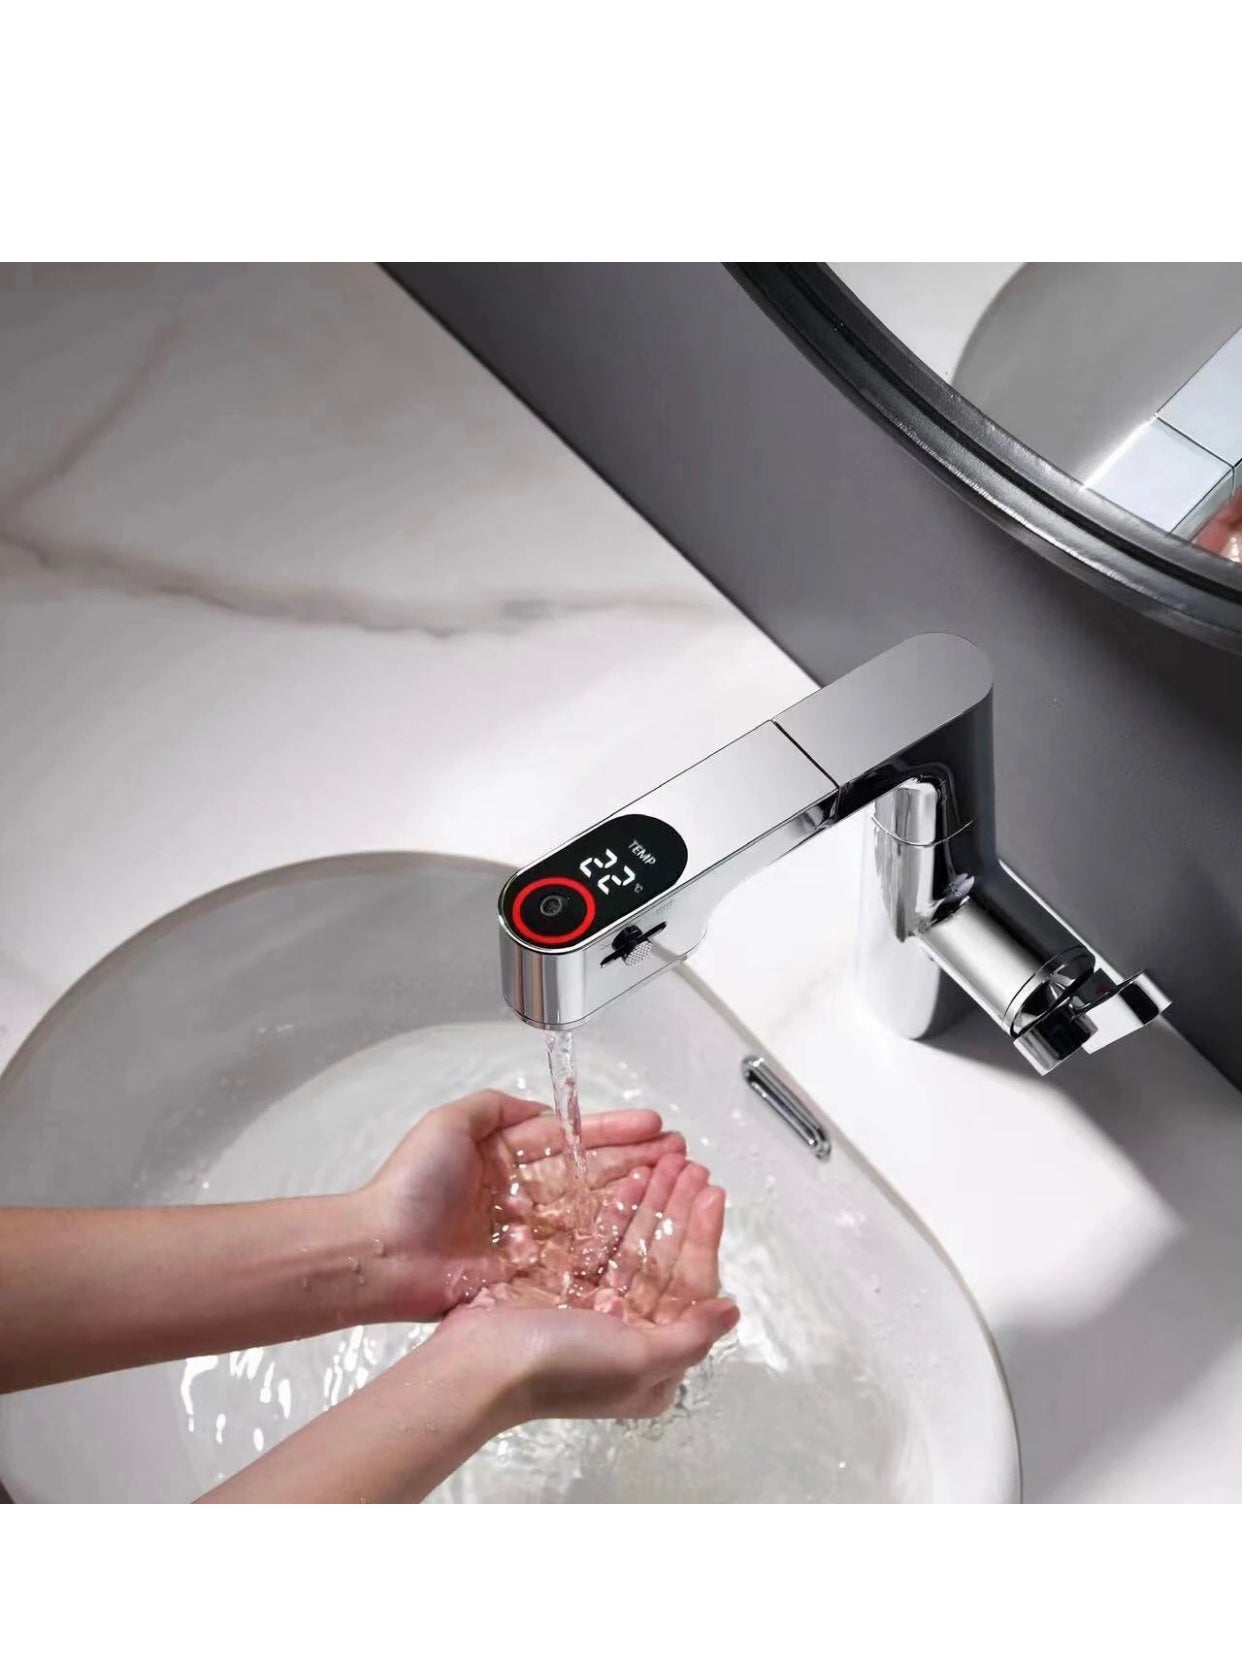 A|M Aquae Digital Basin Faucet Touch Button Temperature Smart Tap